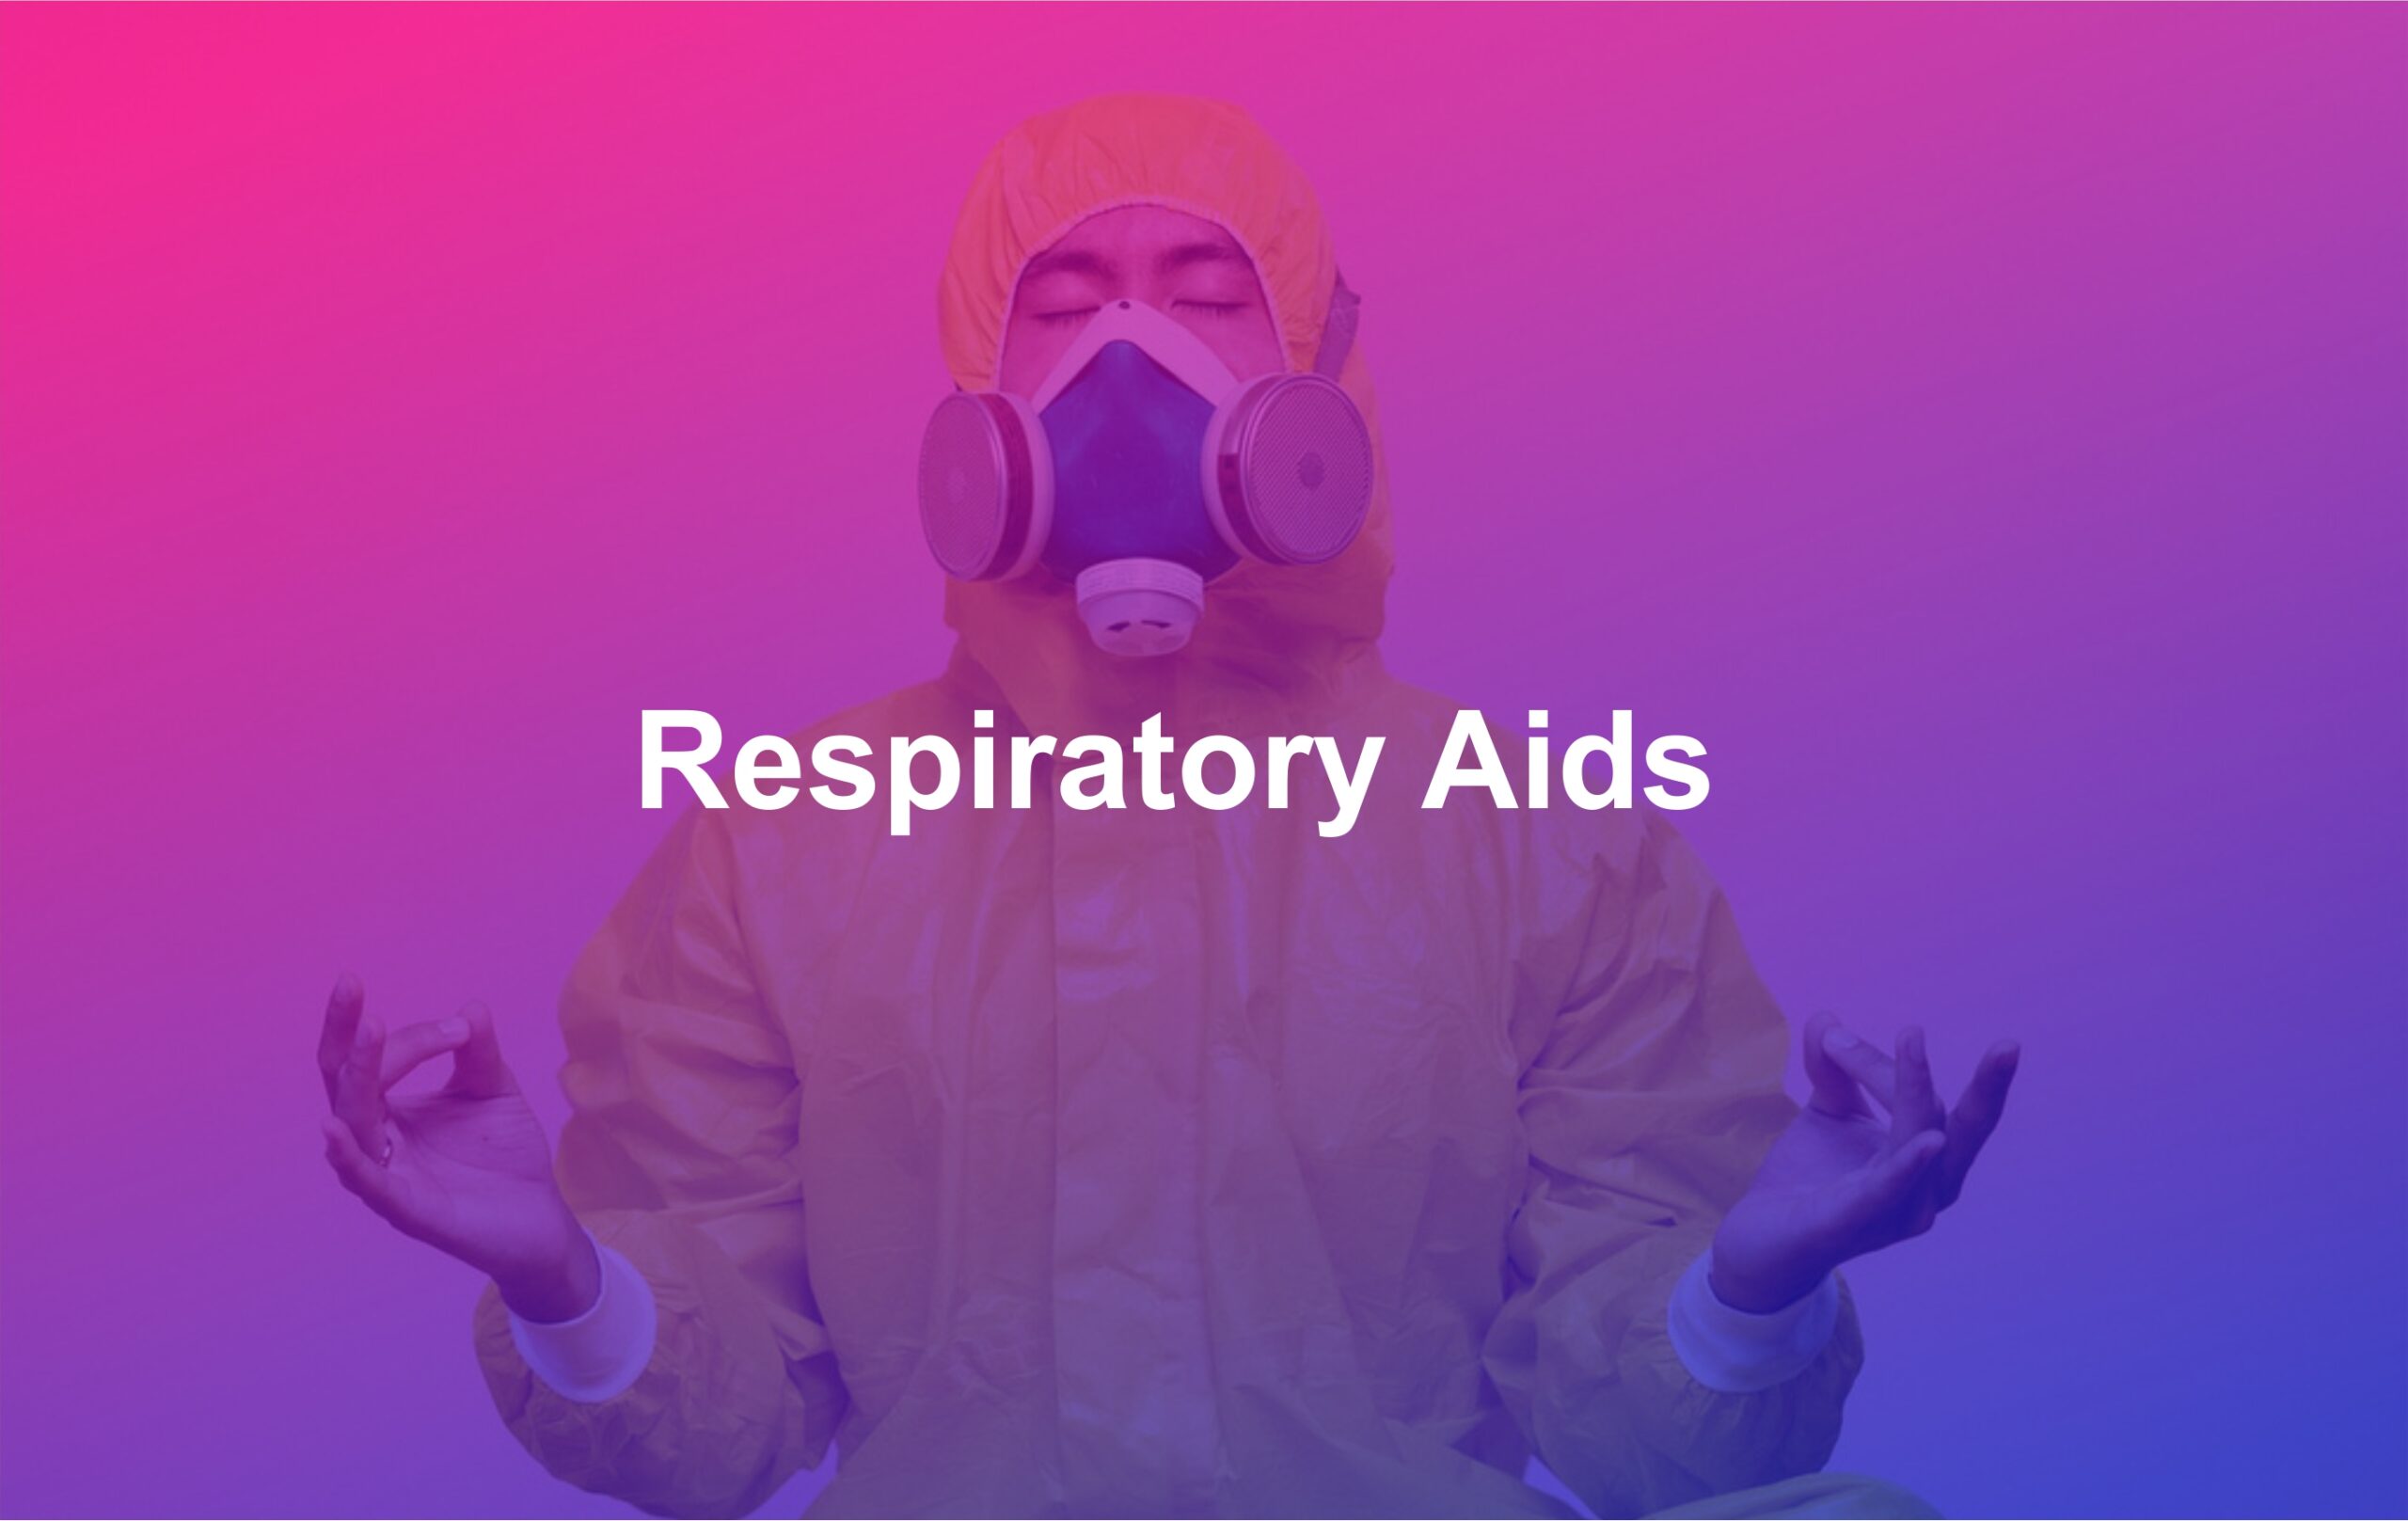 6 Types of Respiratory Aids